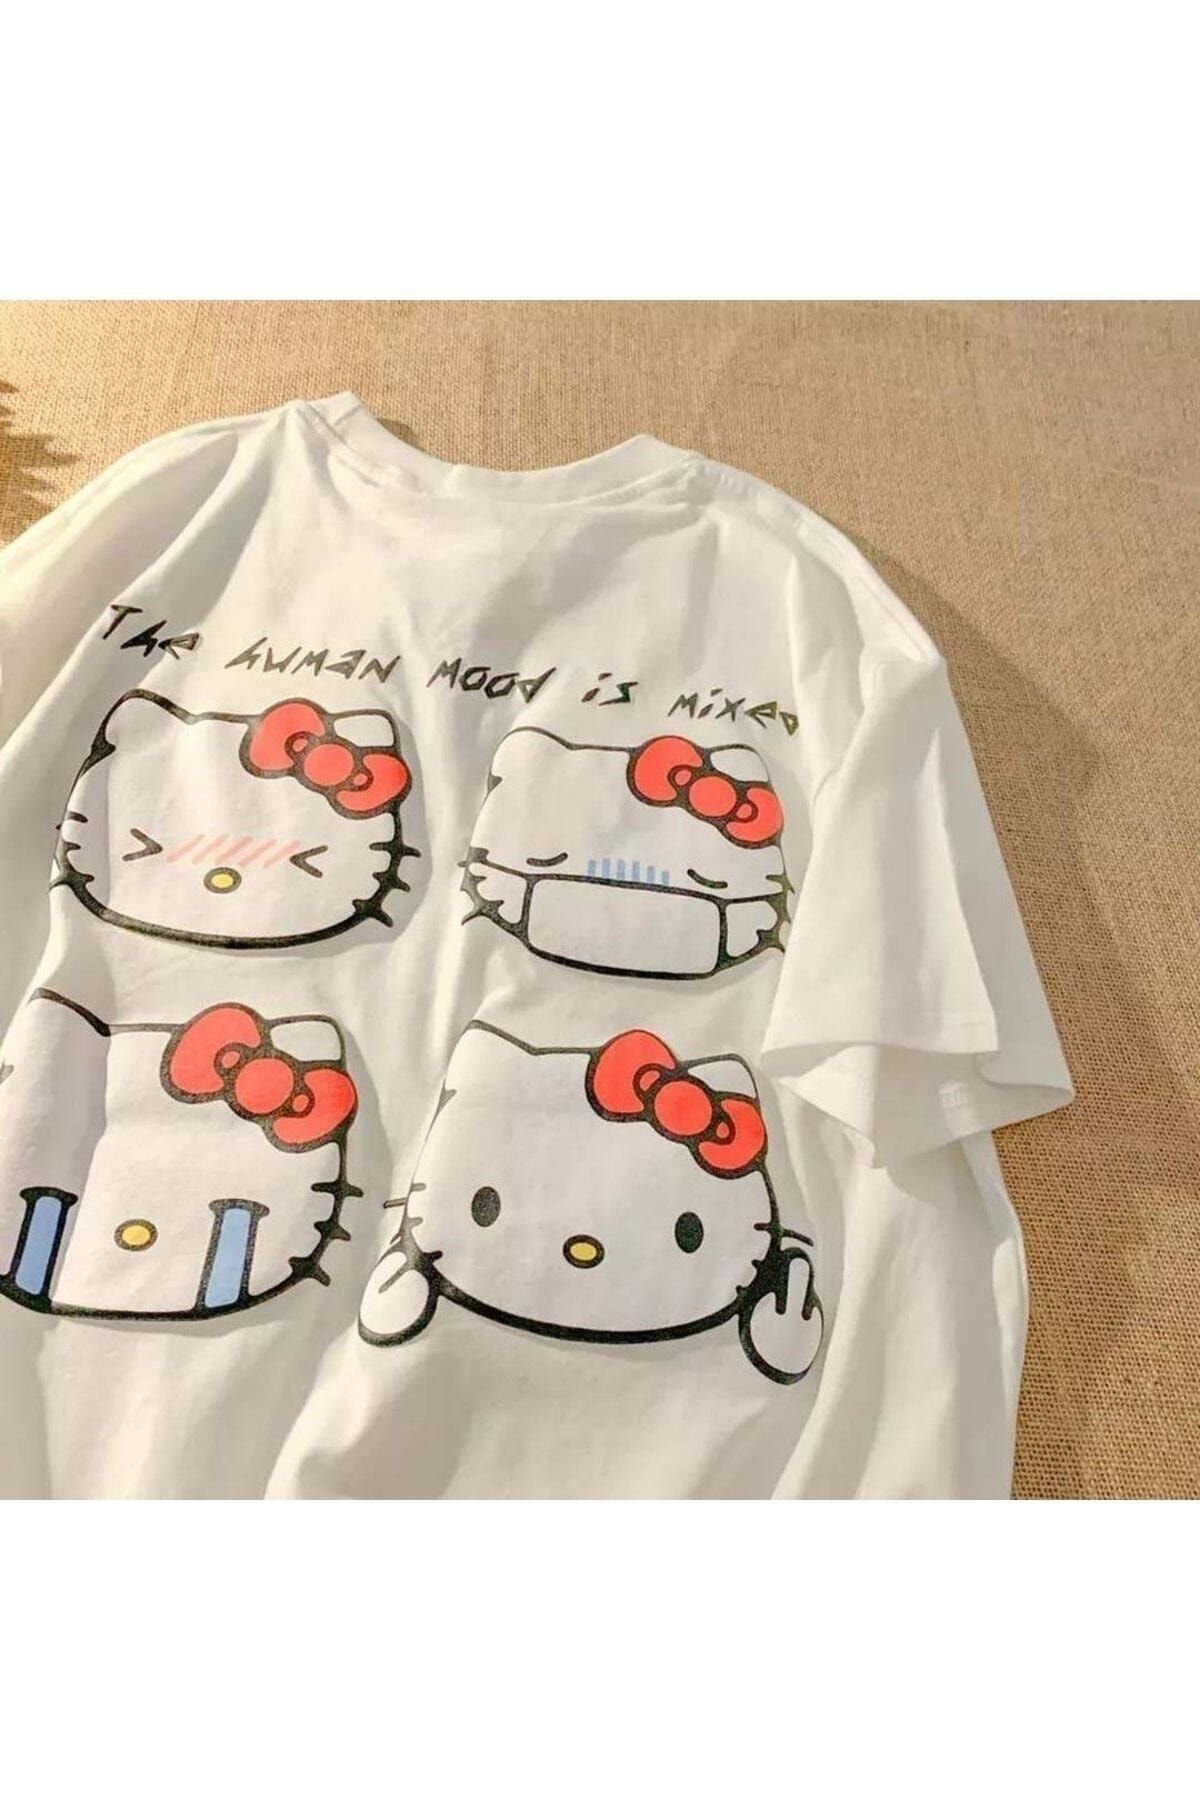 Hunors Sportswear & Company Hello Kitty Sick Emoji Beyaz Oversize (unisex) T-shirt